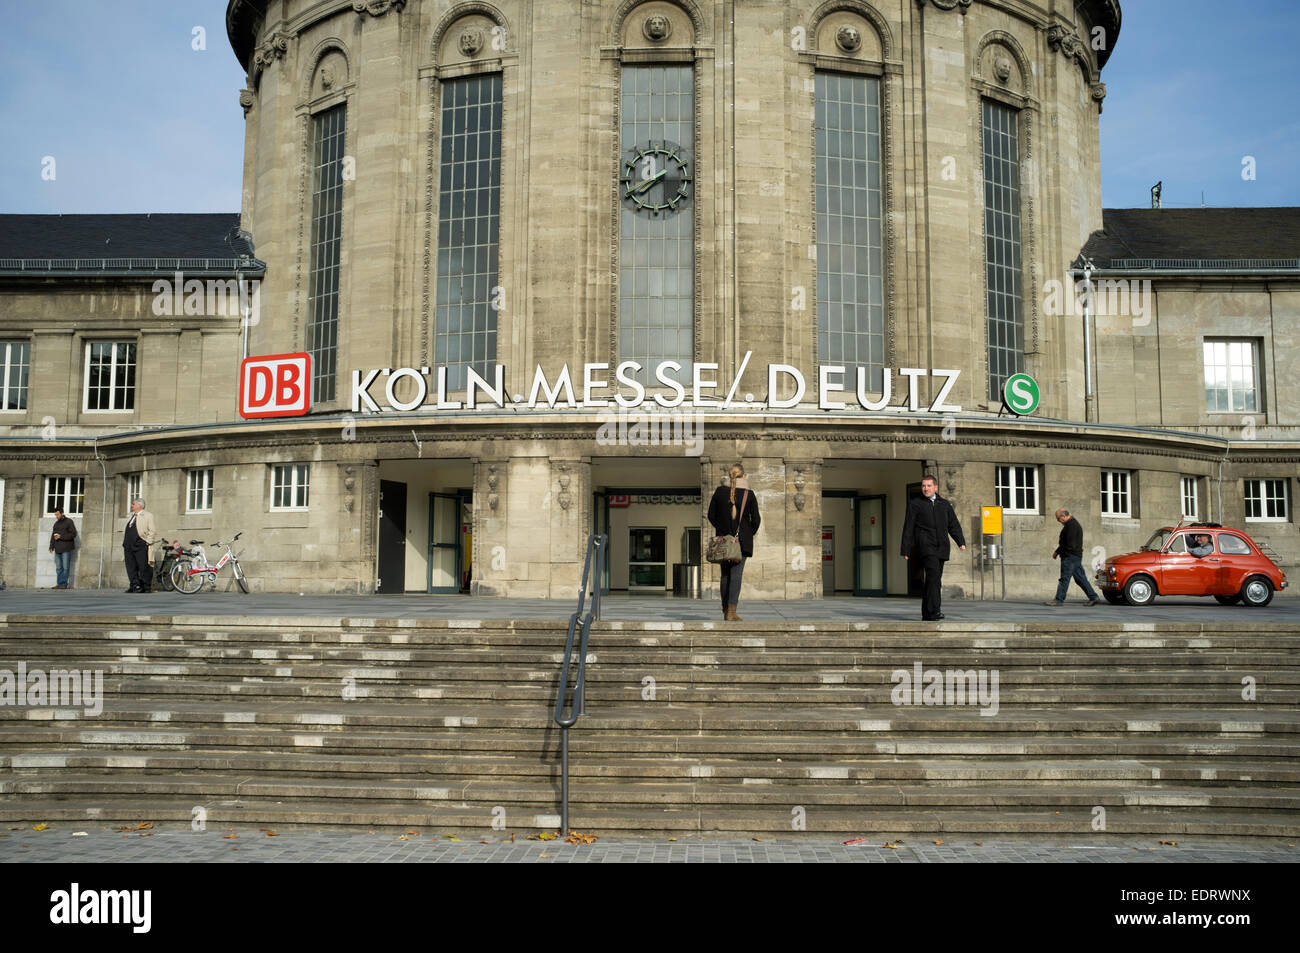 Koln Messe Deutz railway station, Cologne, Germany Stock Photo - Alamy